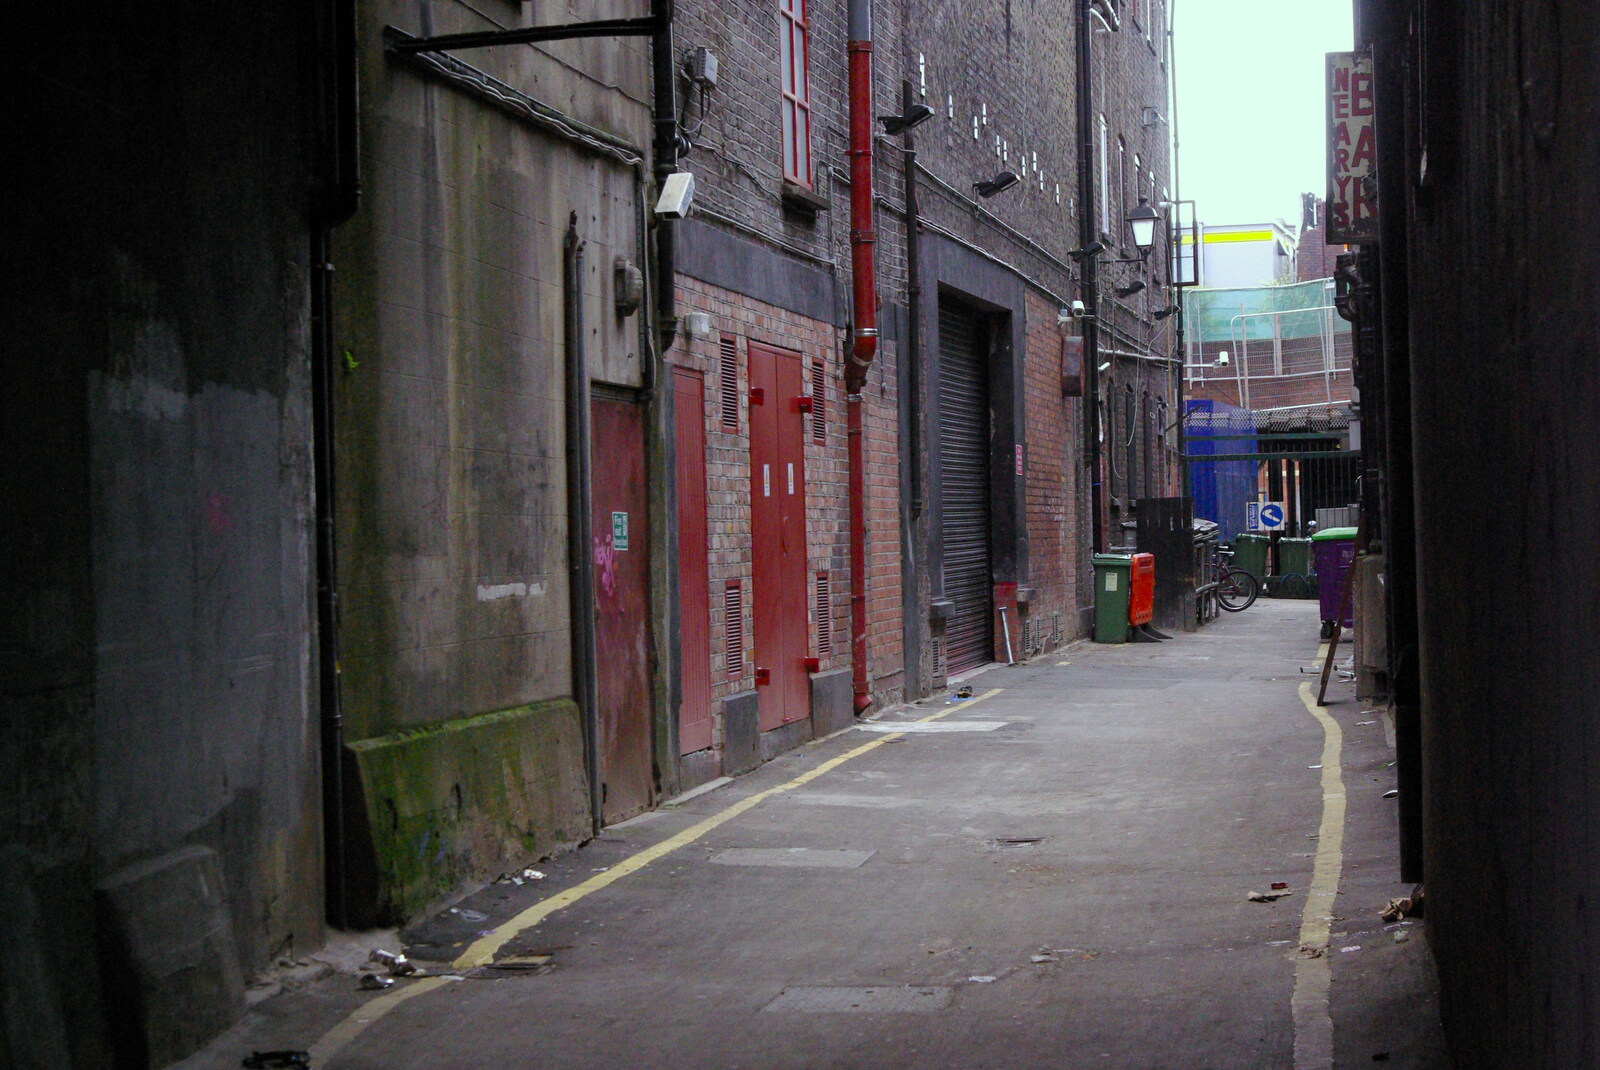 Easter in Dublin, Ireland - 21st March 2008: Back alley off Grafton Street, Dublin